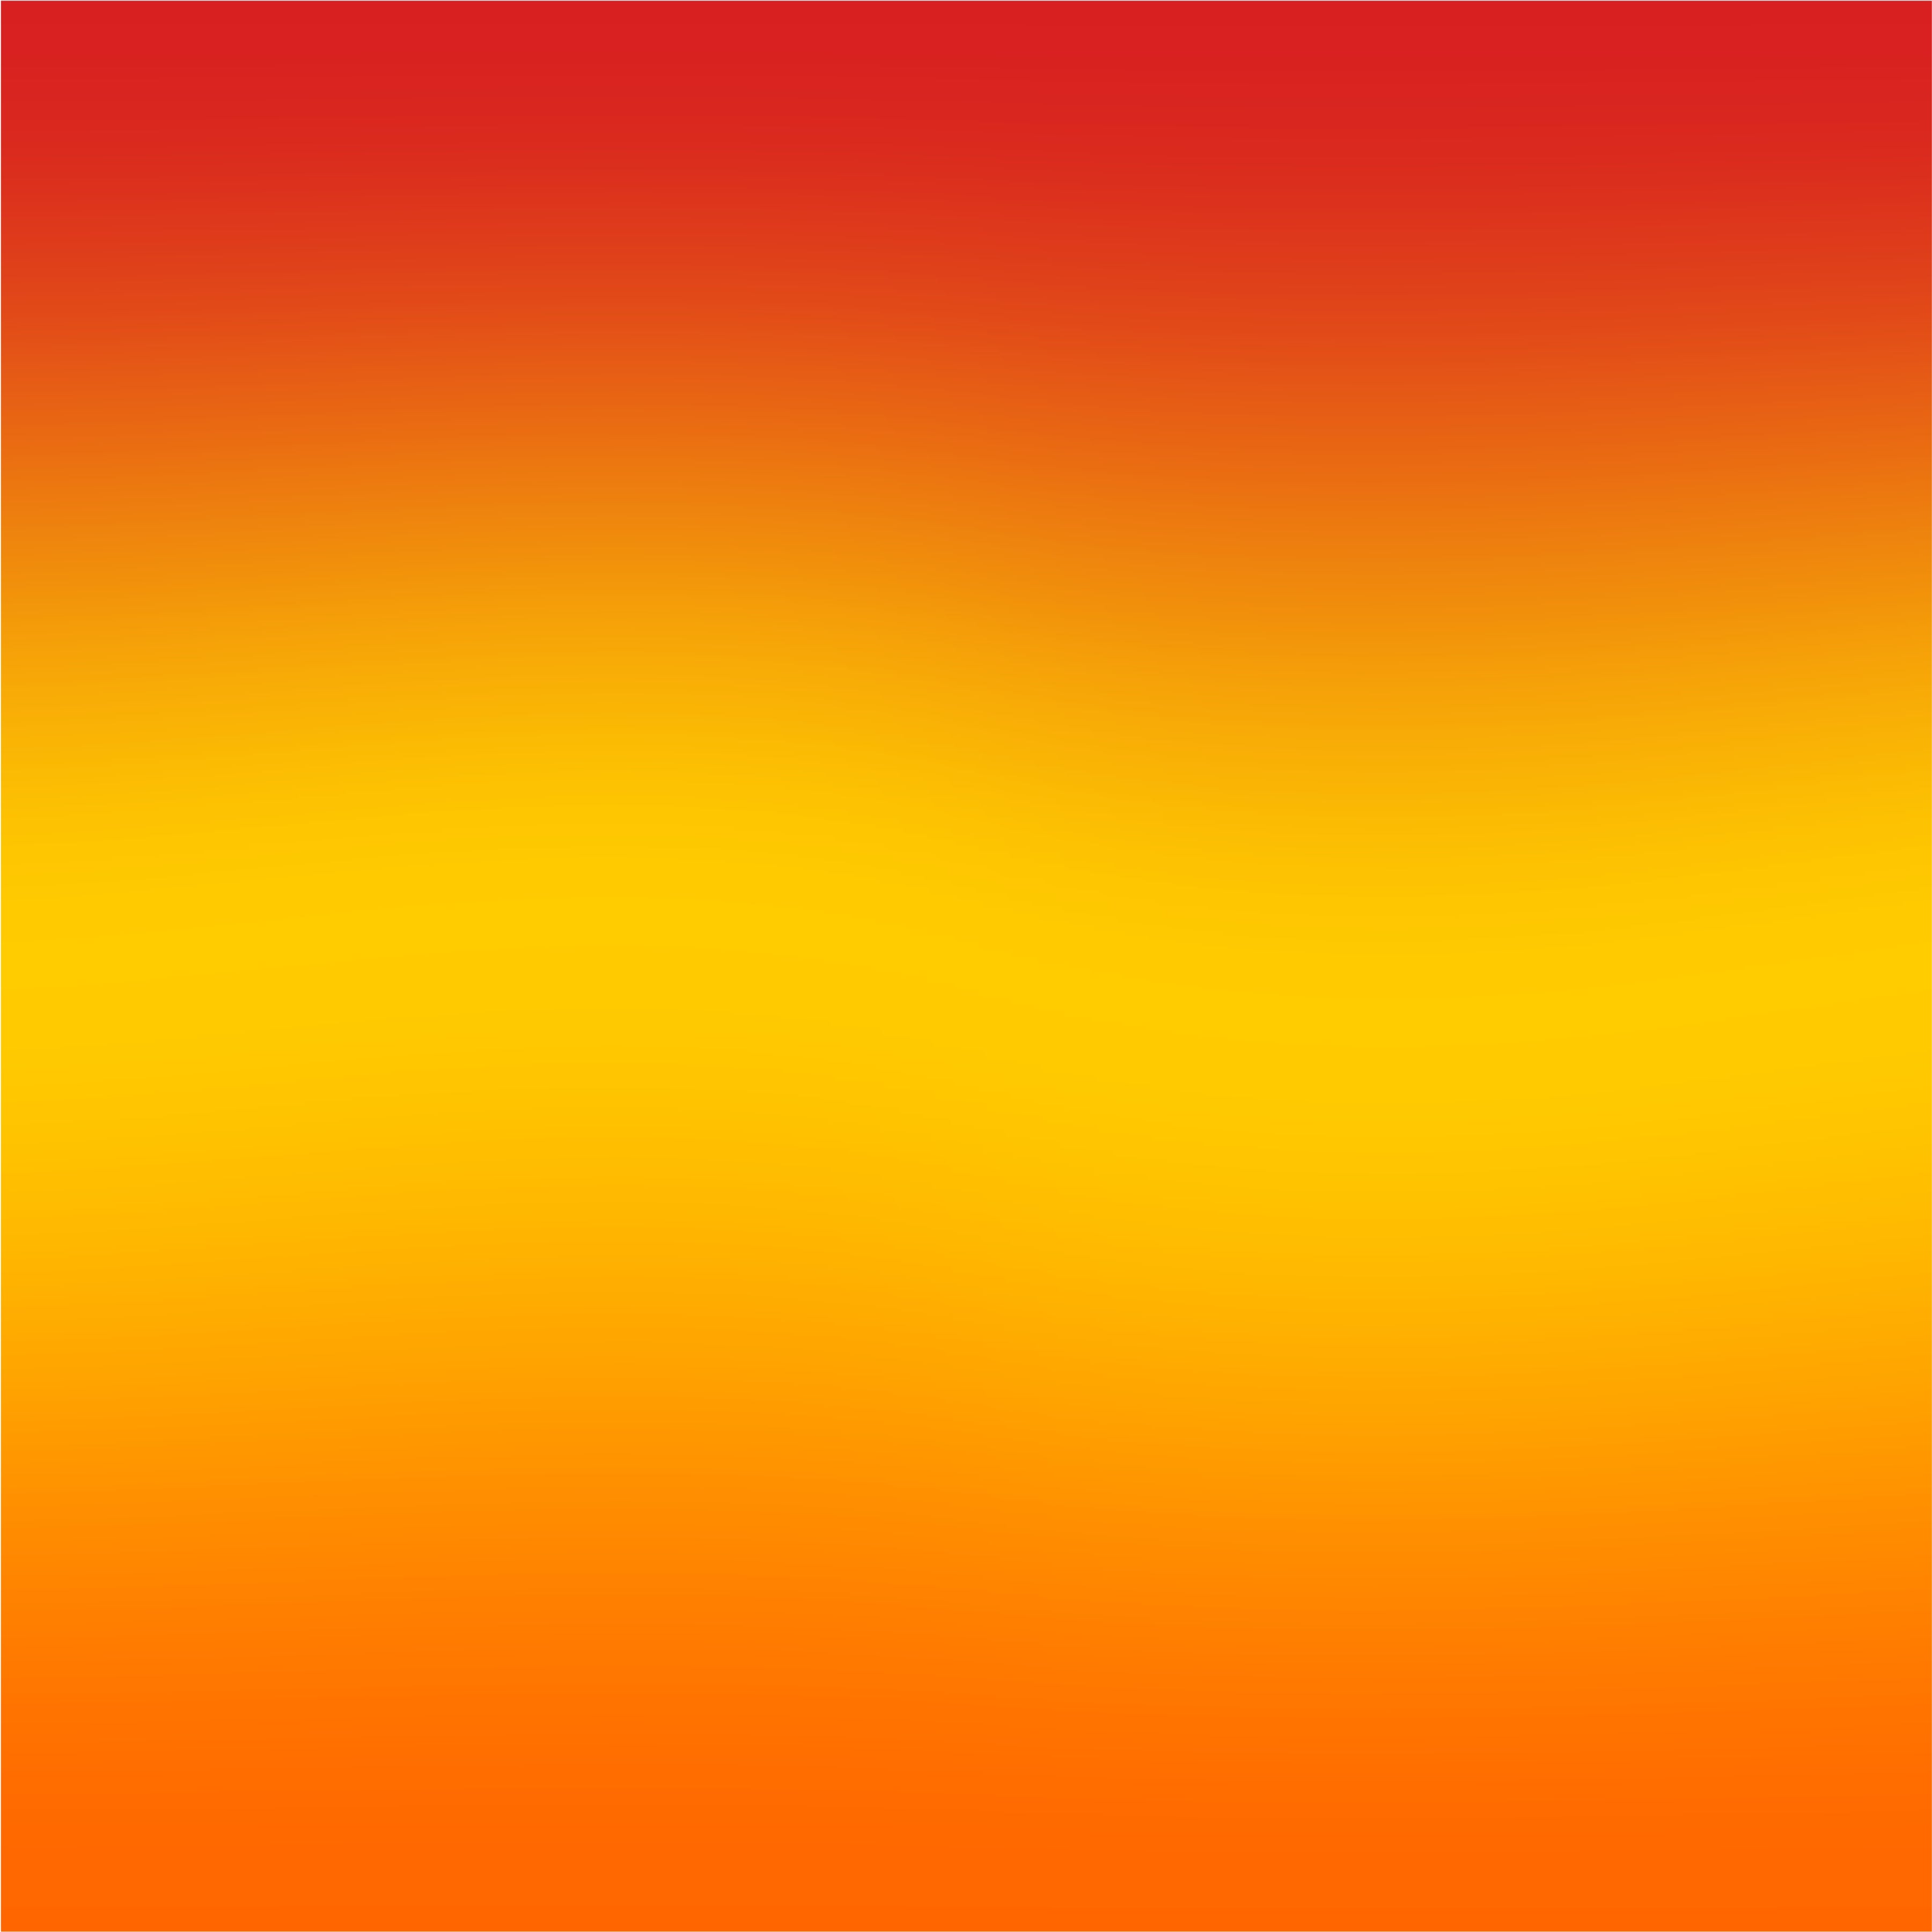 Fire Ombre Red to Orange Pattern Vinyl 12" x 12" - The Vinyl Haus